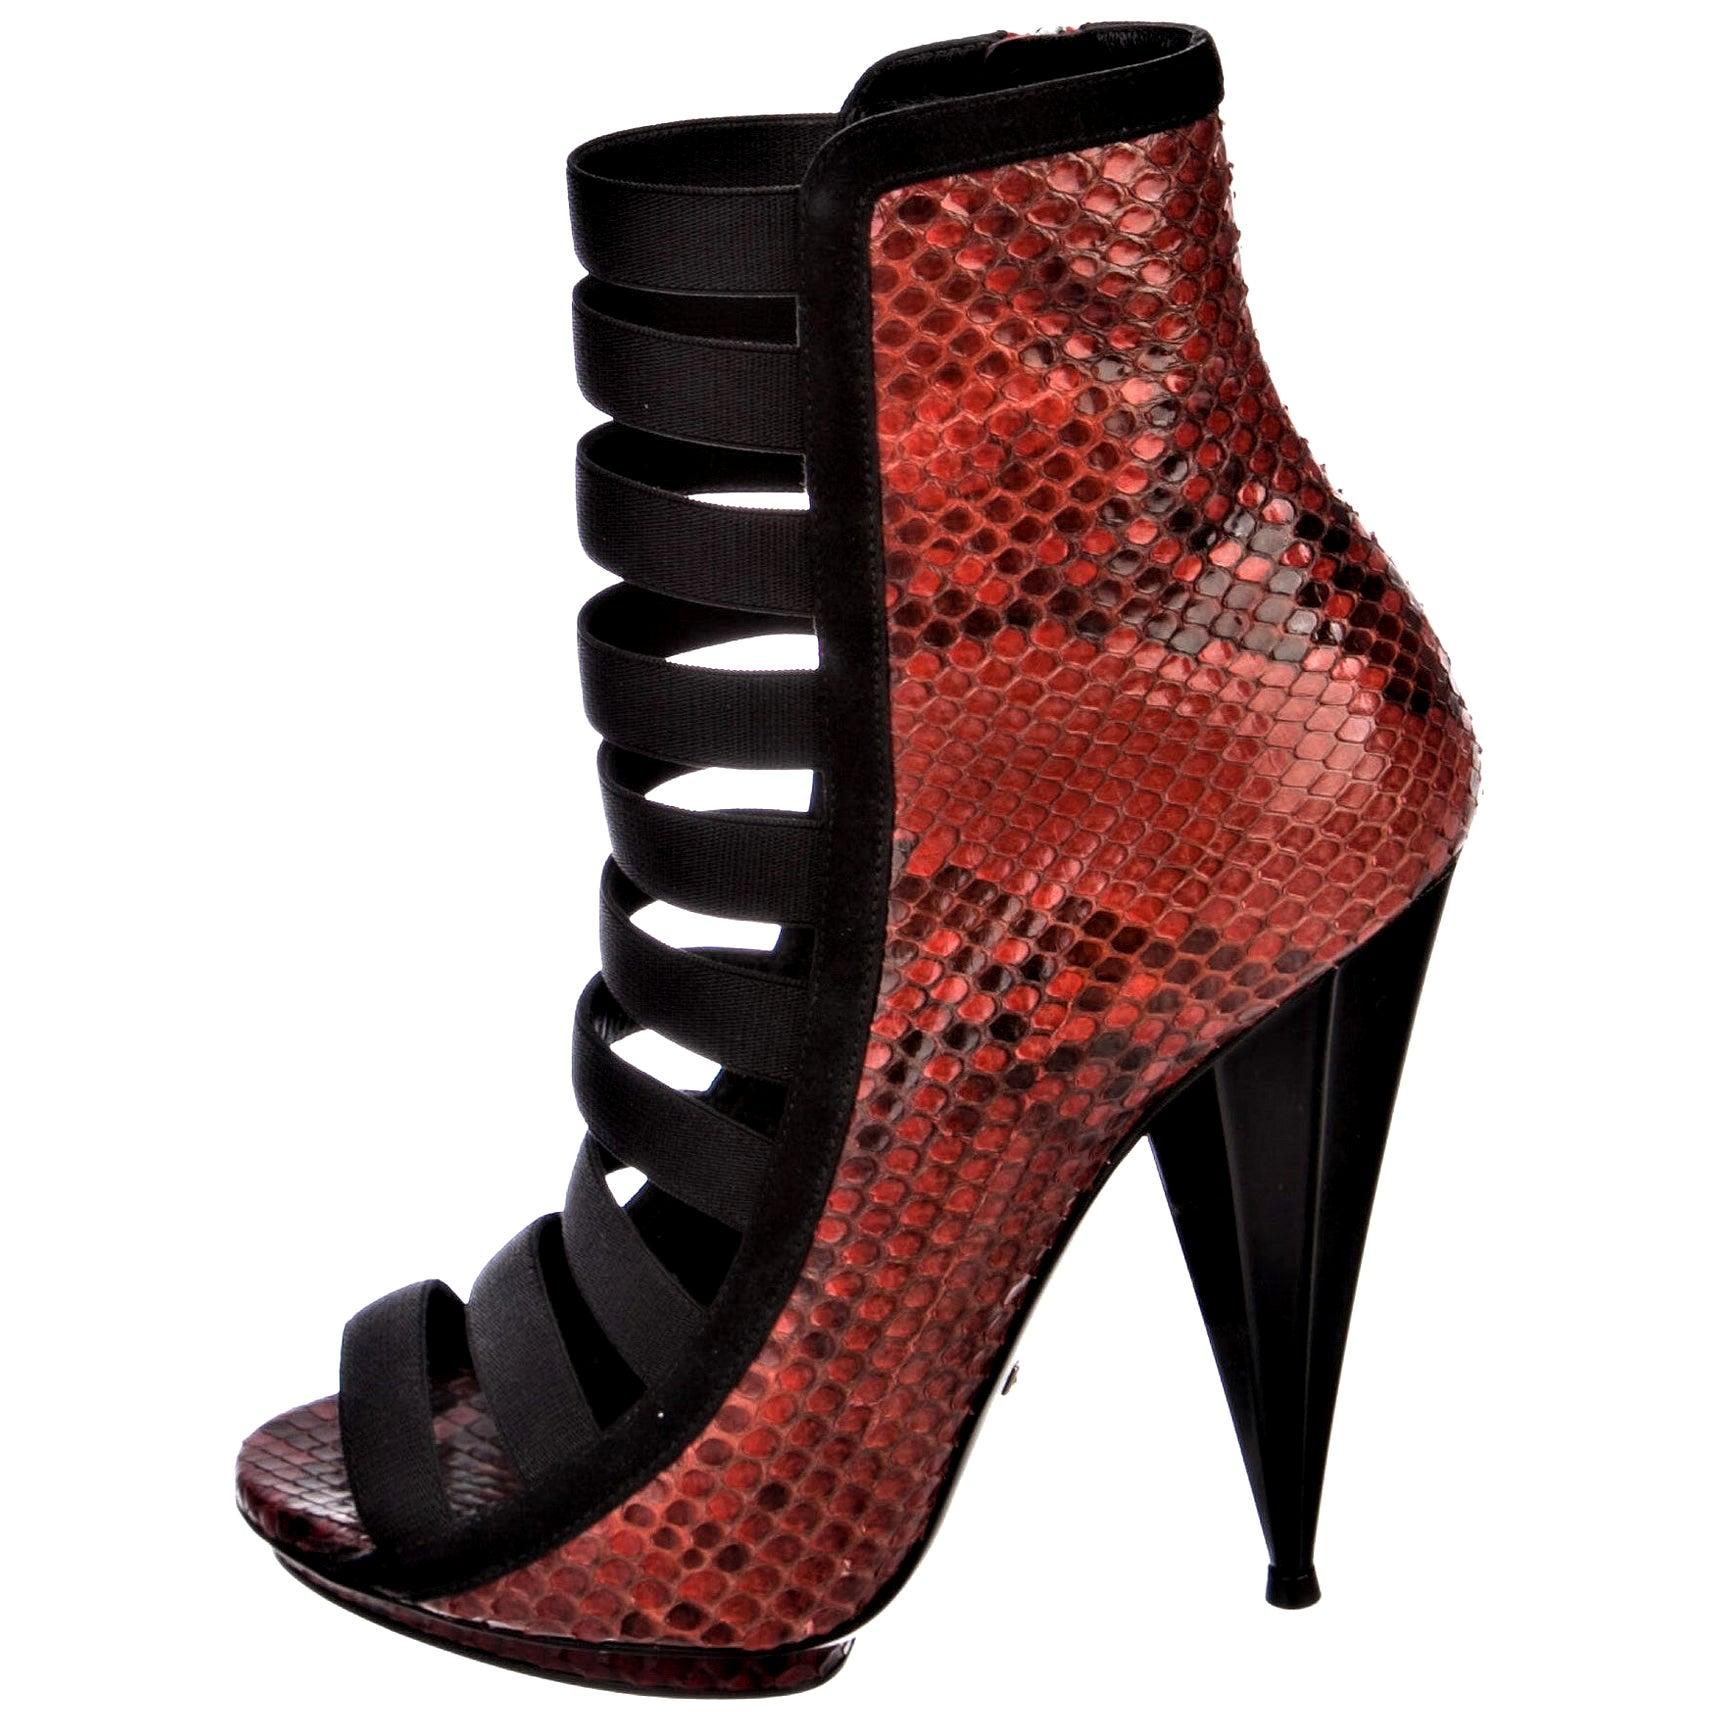 New Gucci Python Snakeskin S/S 2014 Runway Nicki Minaj Heels Booties Boots Sz 38